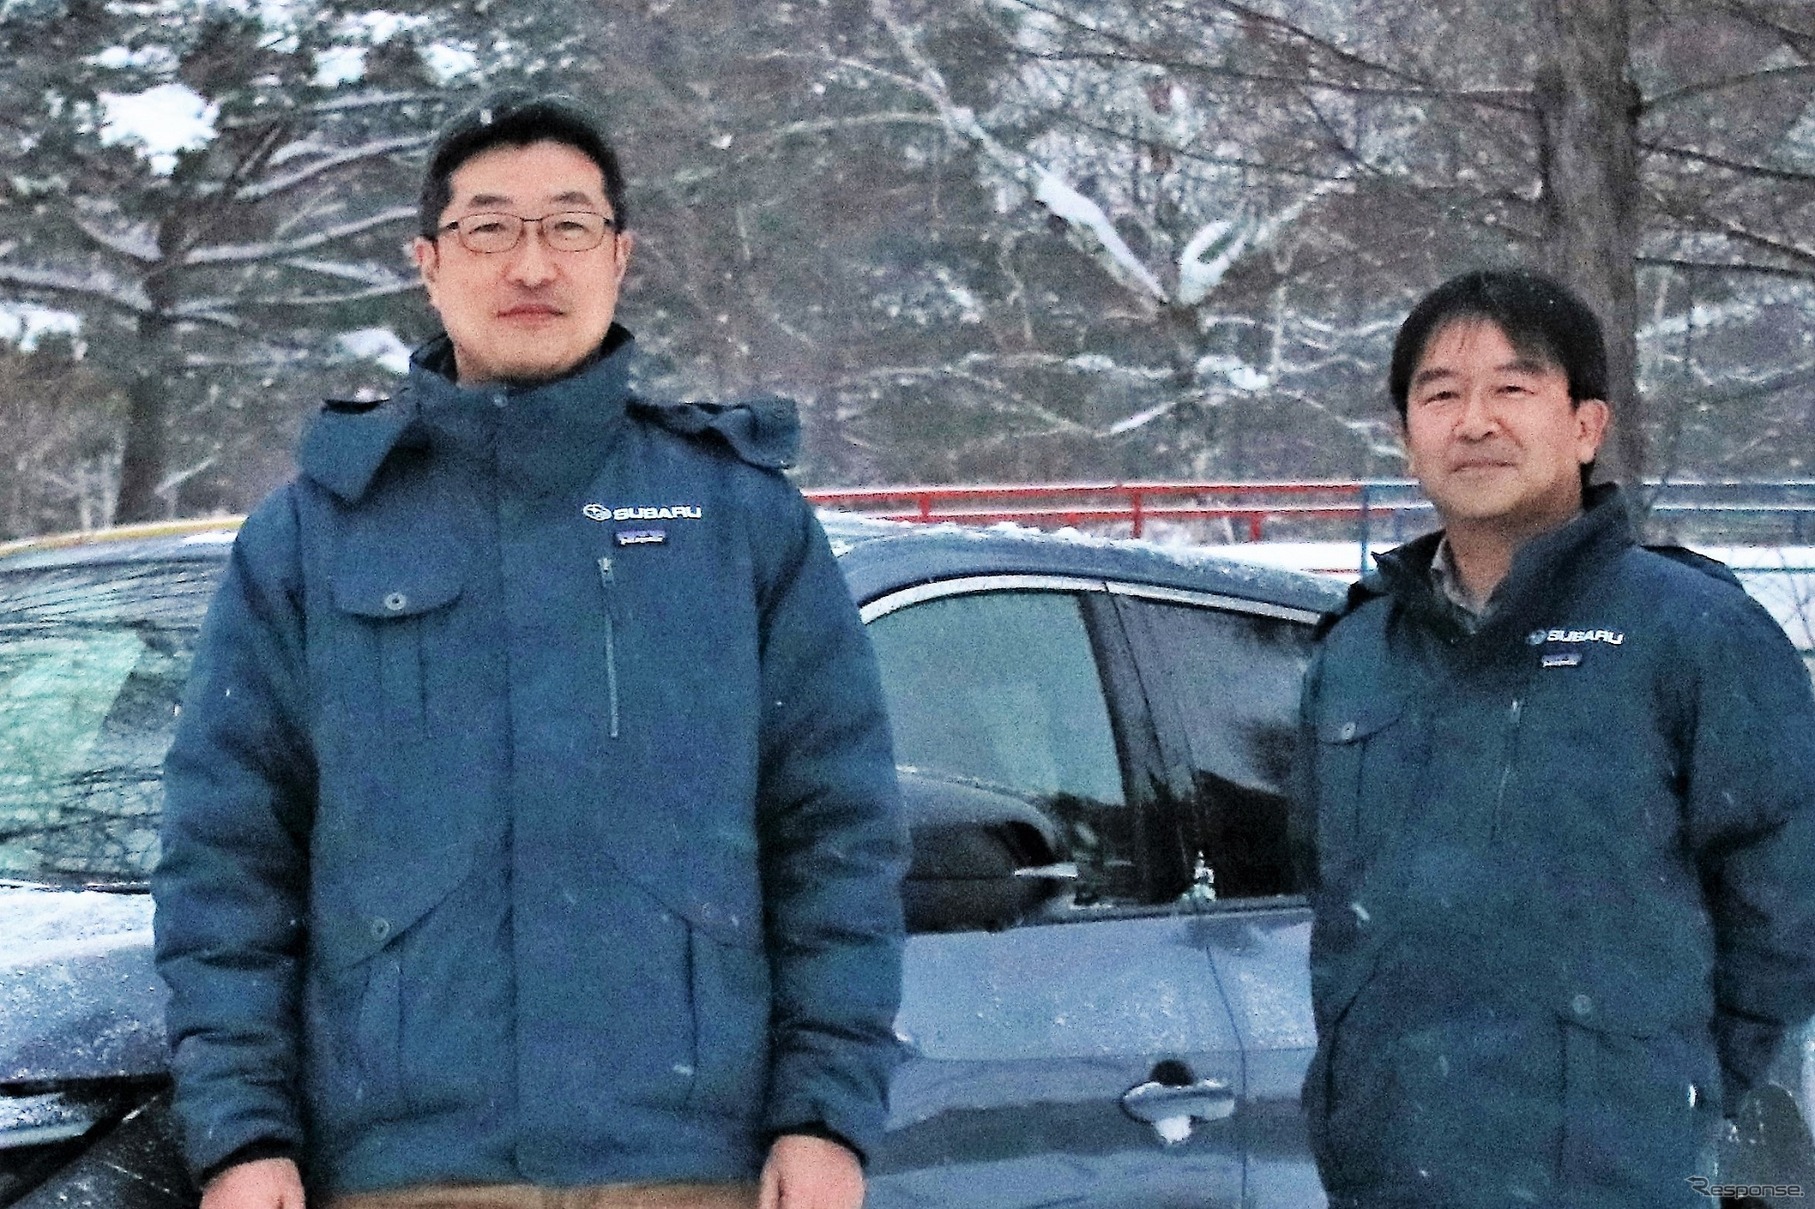 >SUBARU商品企画本部プロジェクトゼネラルマネージャーの小野大輔さん(左)とSUBARU商品企画本部プロジェクトシニアマネージャーの藤枝健一郎さん(右)